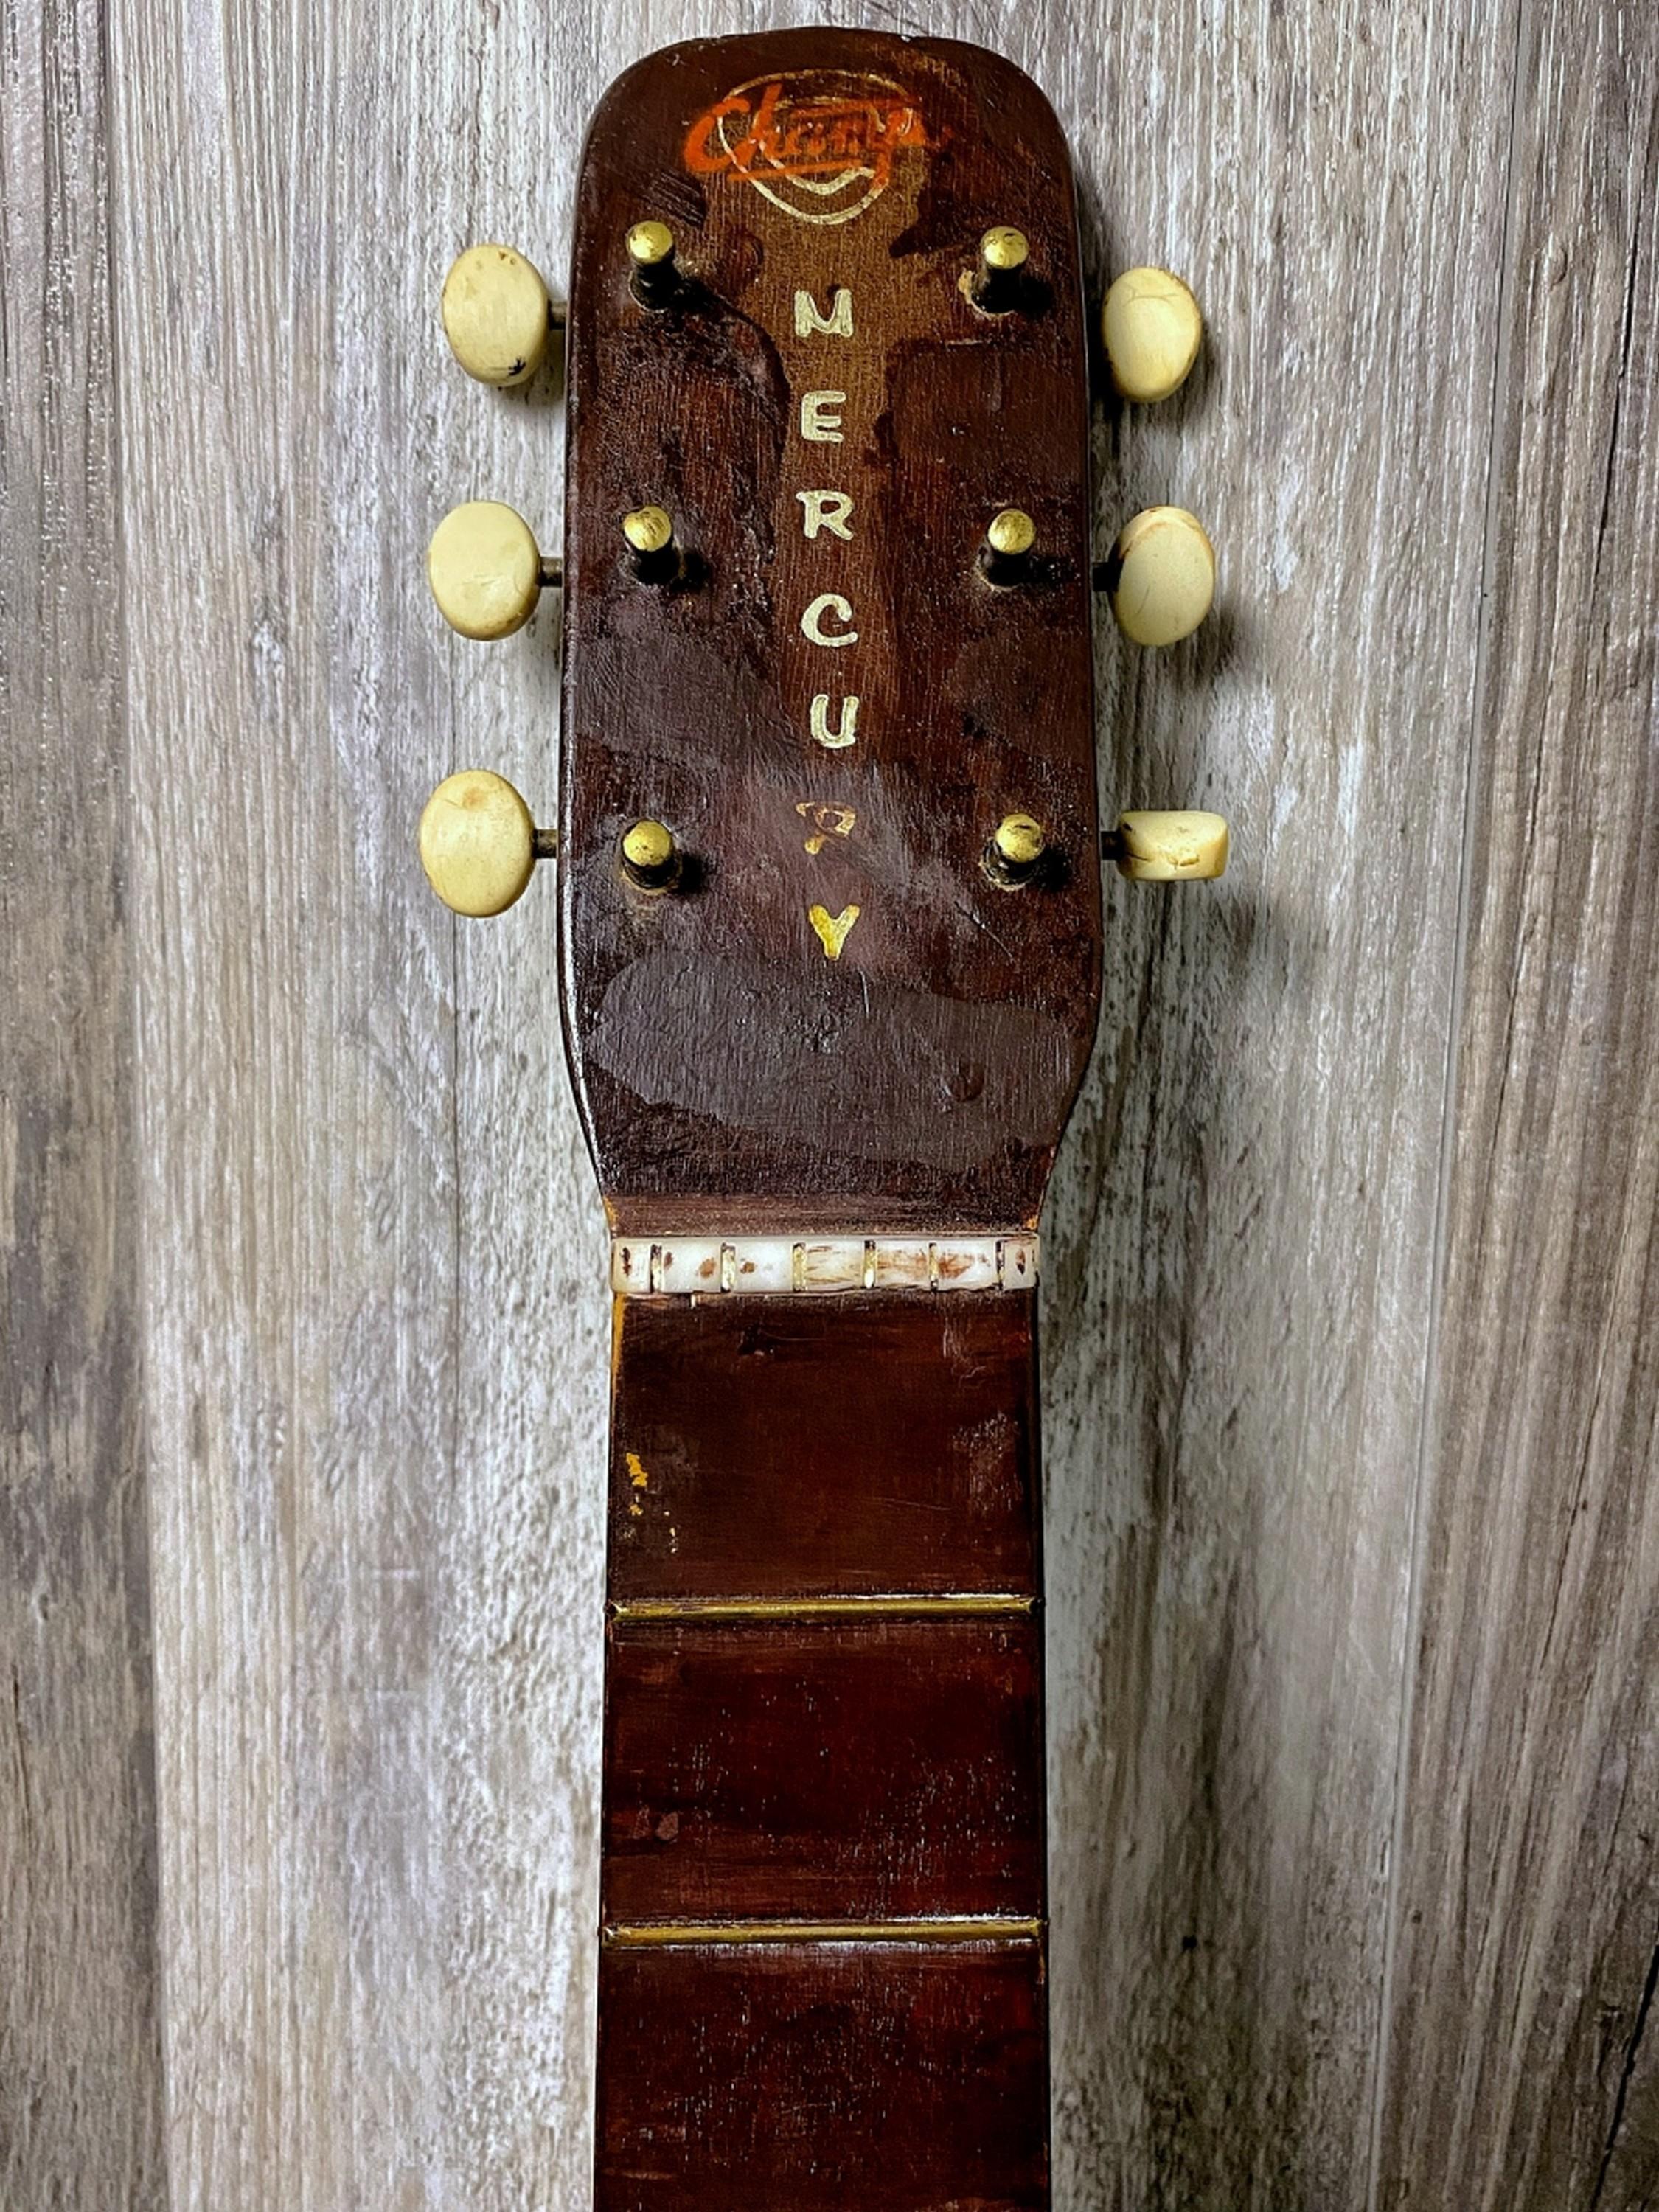 1940's Mercury Parlor ACC Guitar - No Strings Sof